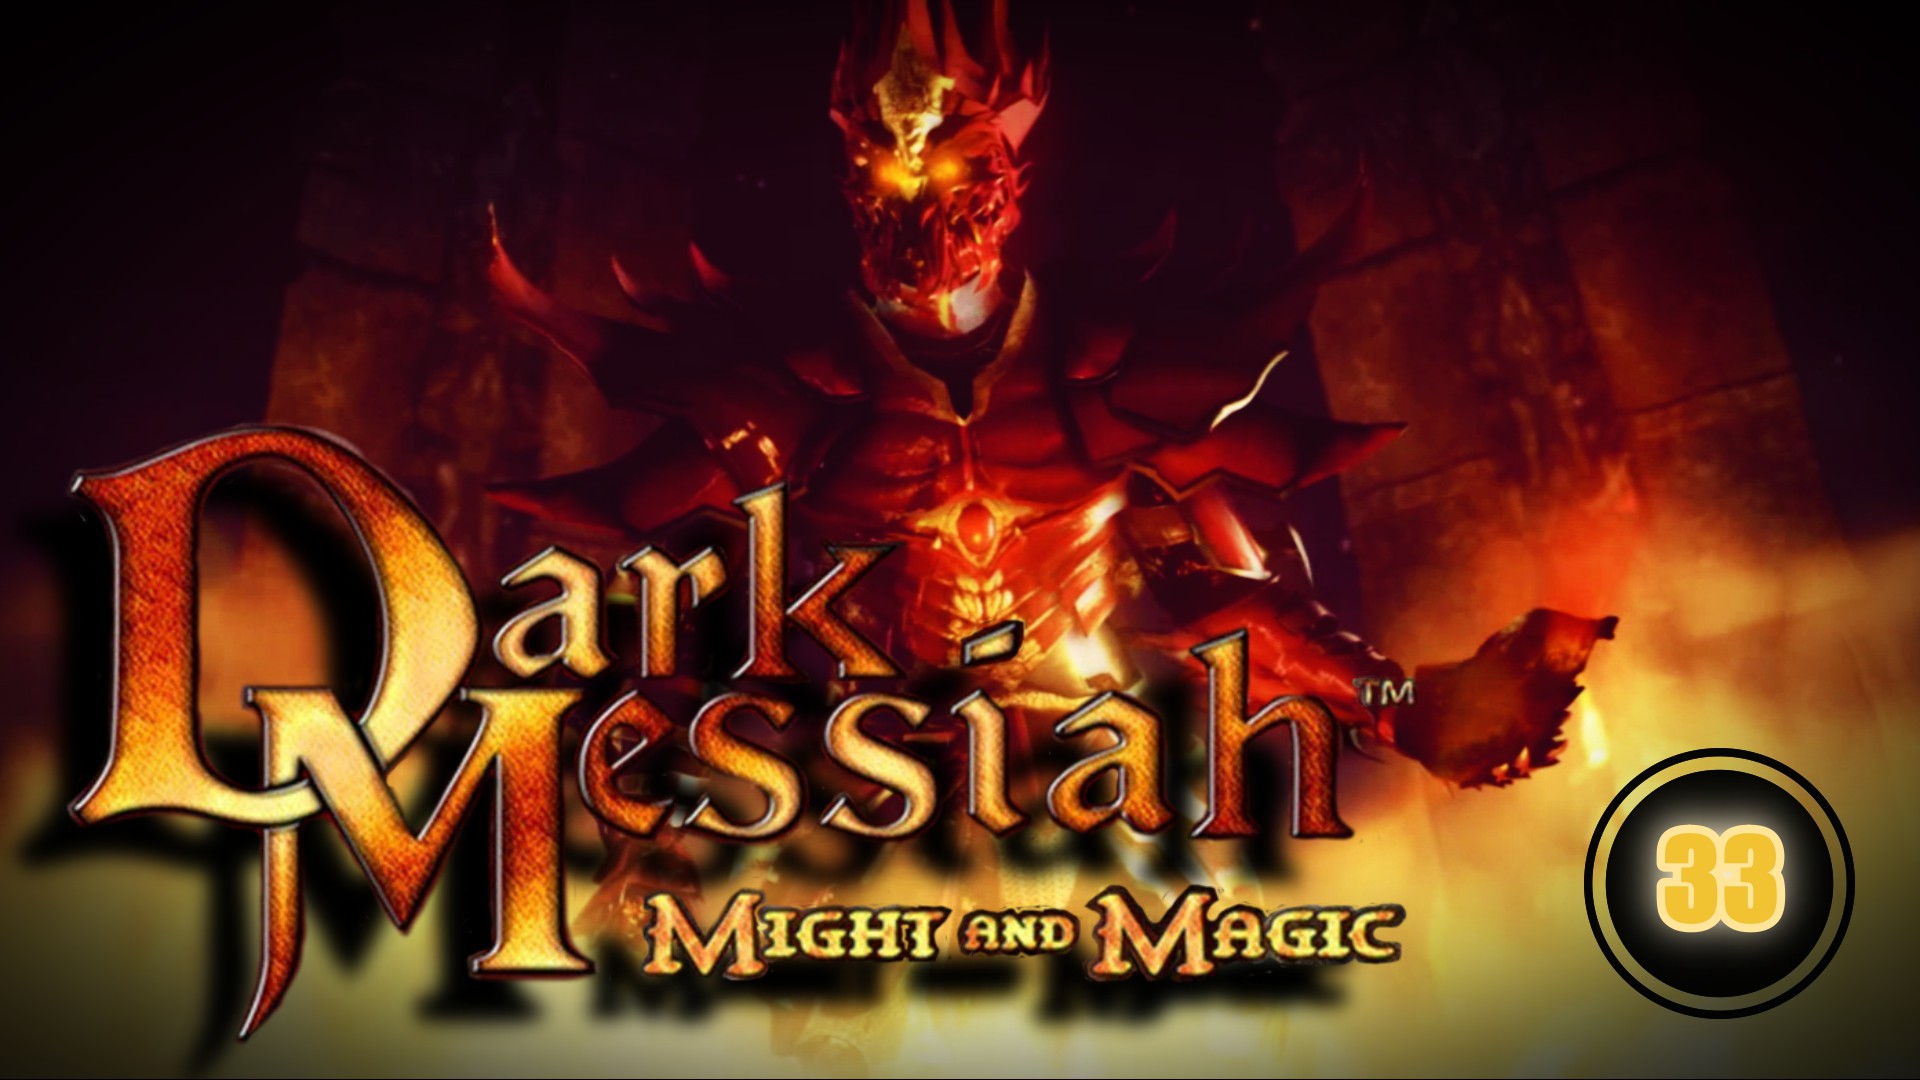 Dark Messiah of Might and Magic 33